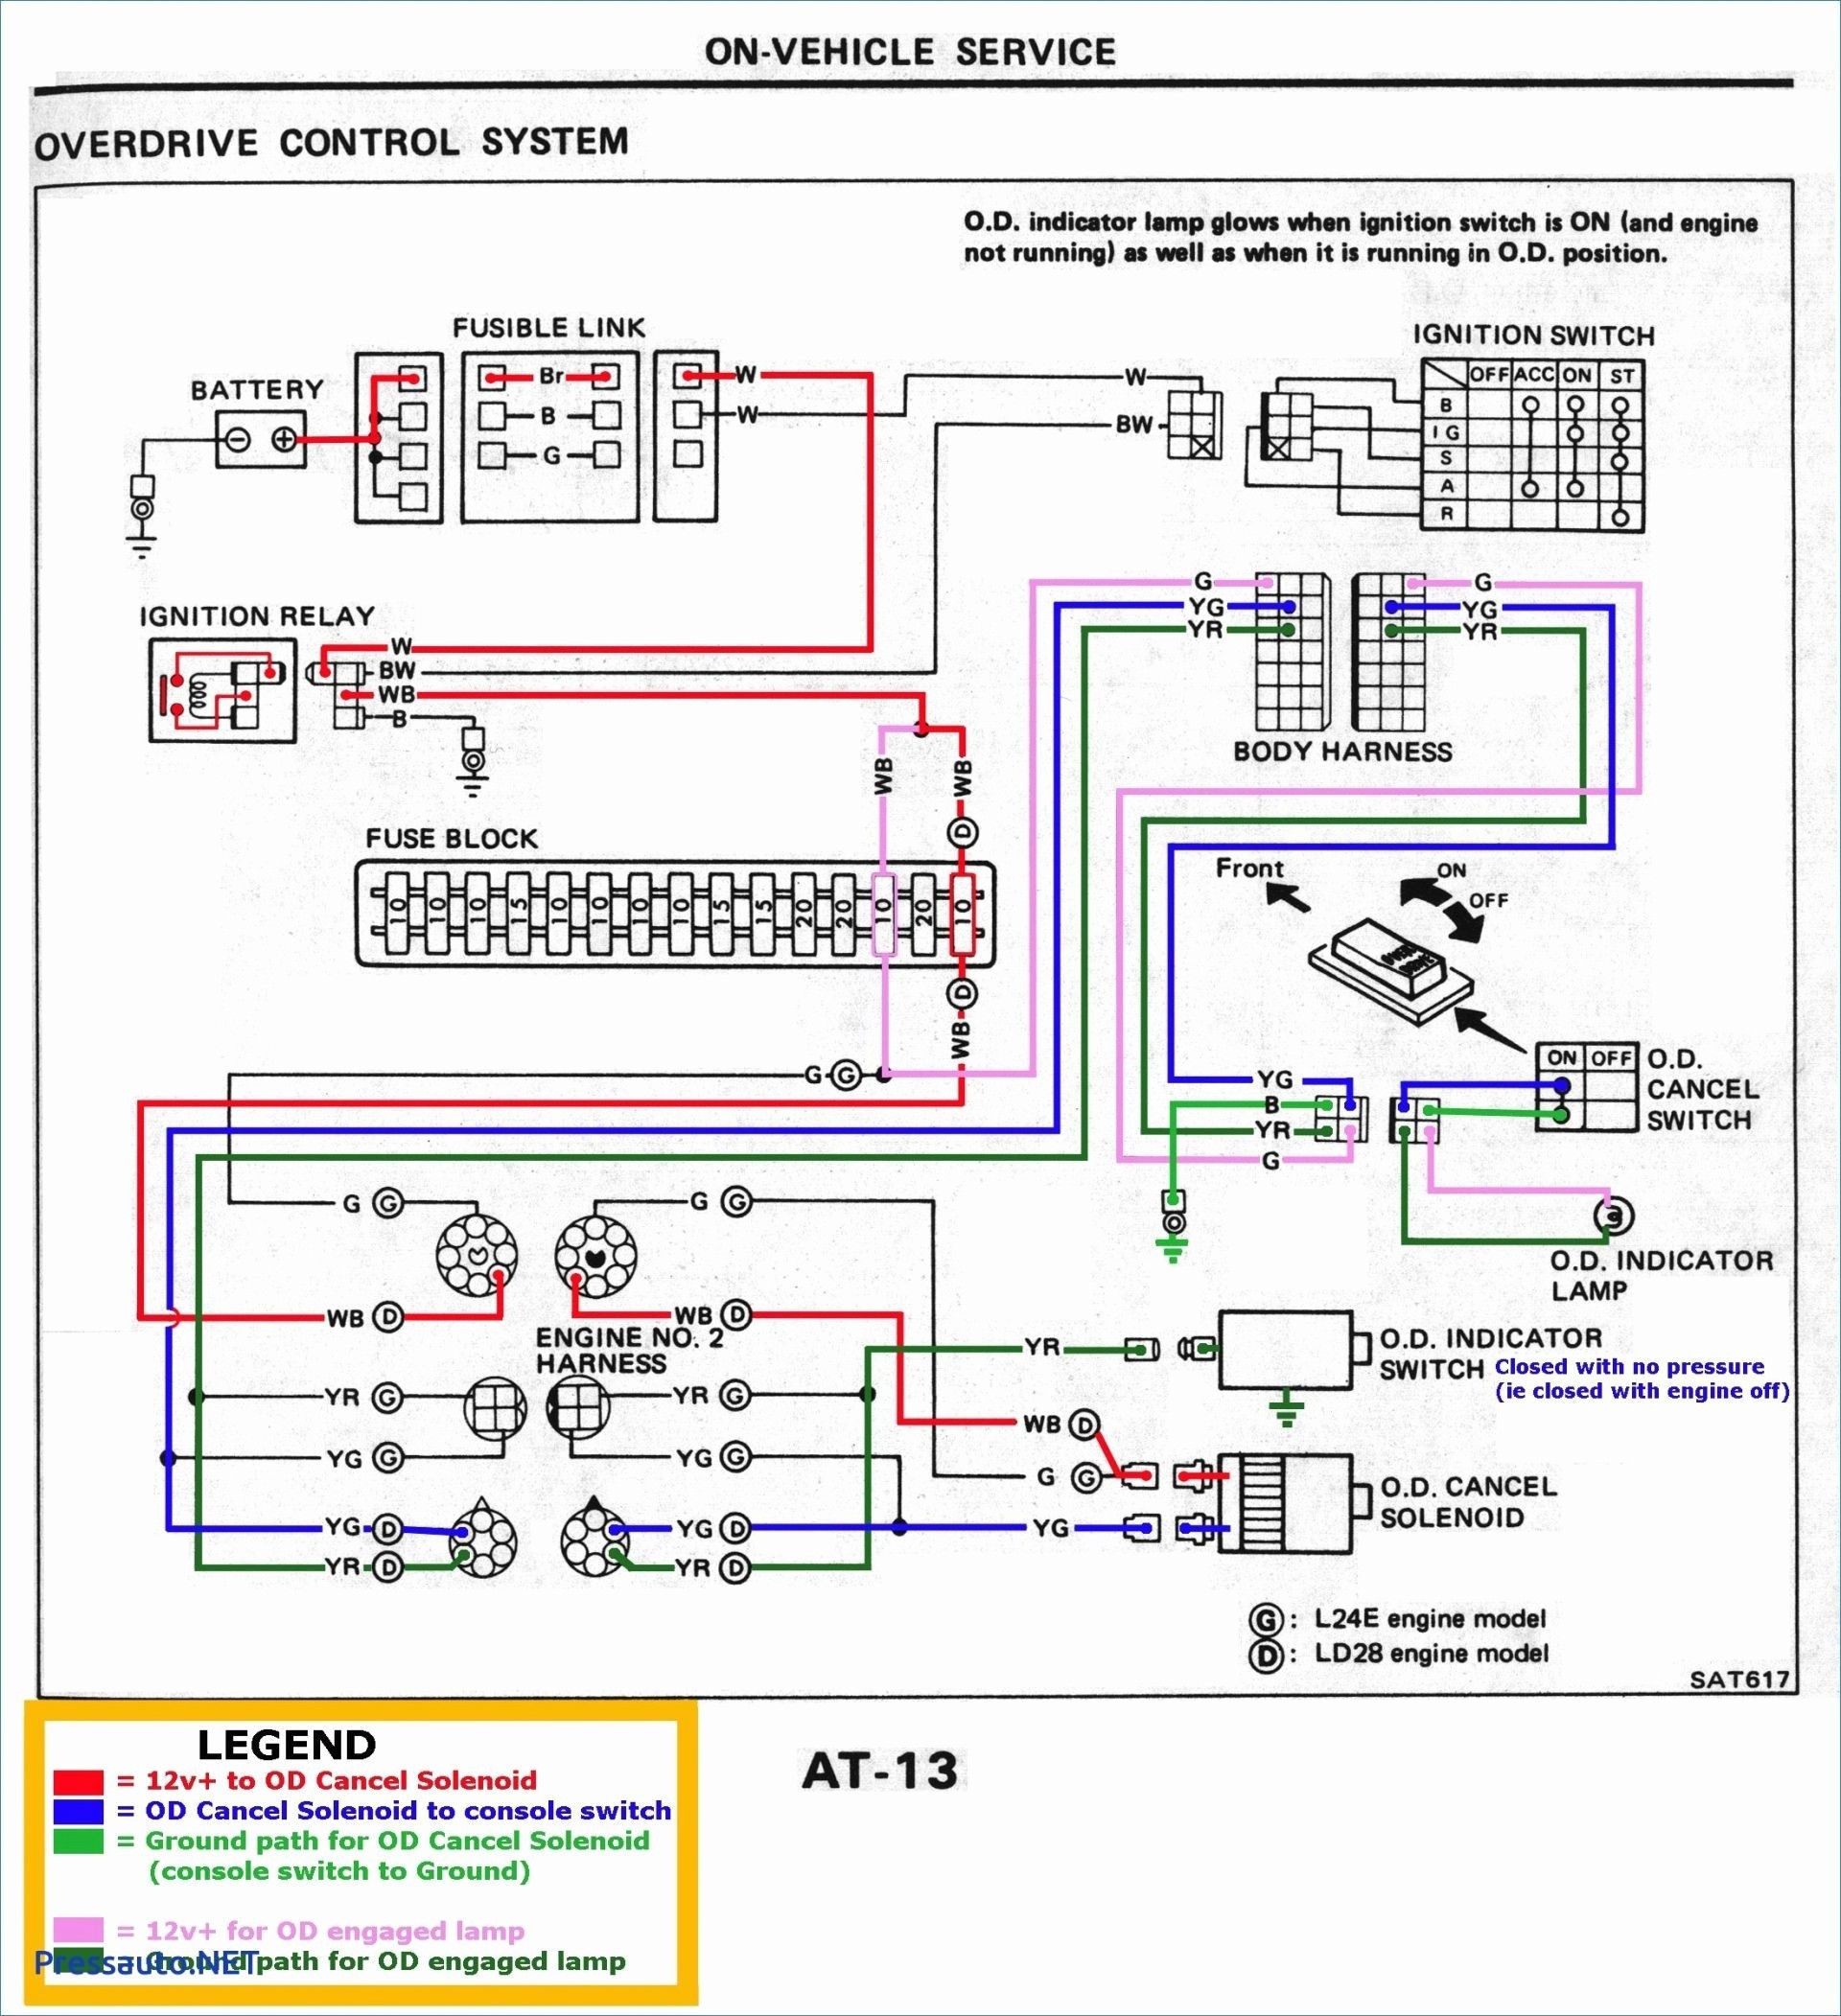 Wiring Diagram Replace Generator with Alternator New Saxo Alternator Wiring Diagram Fresh Converting Generator to